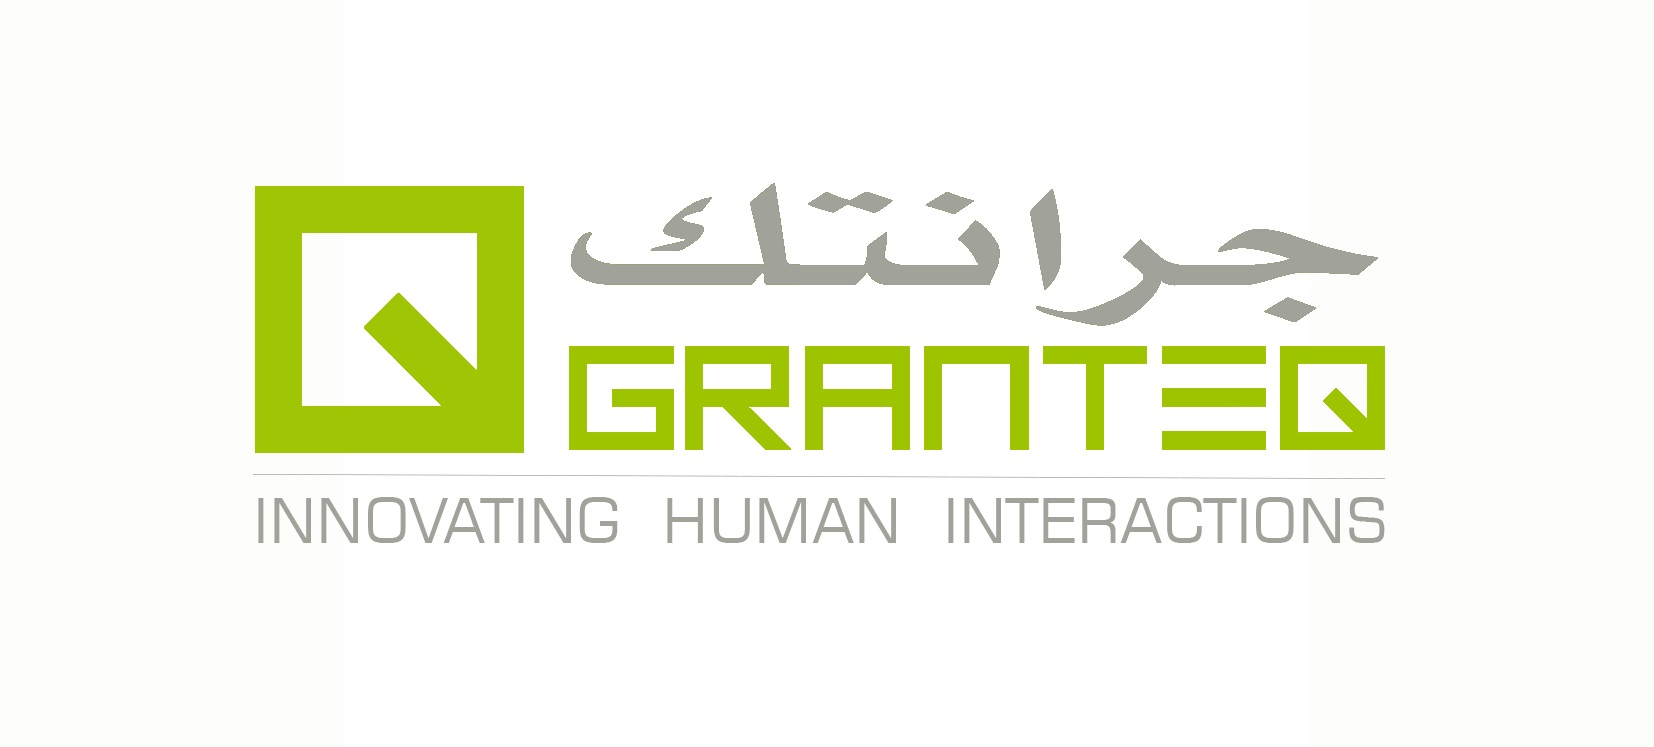 EKTA and GRANTEQ launch strategic partnership